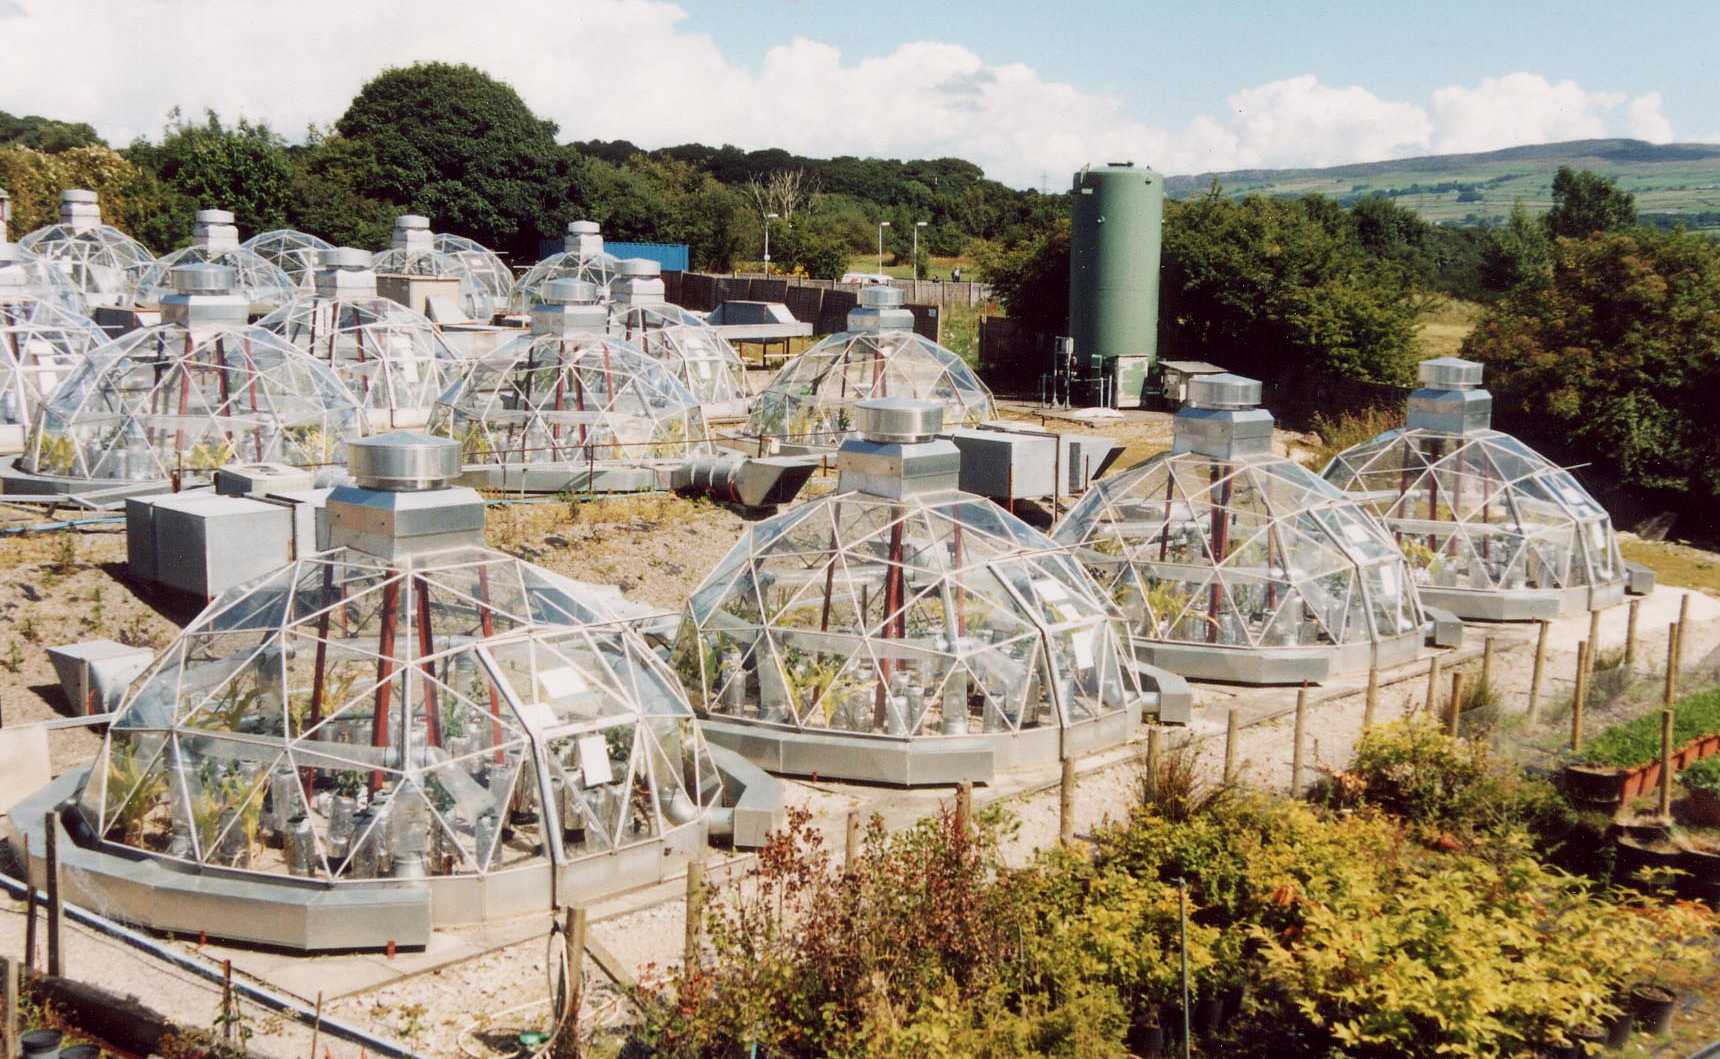 The array of solardomes